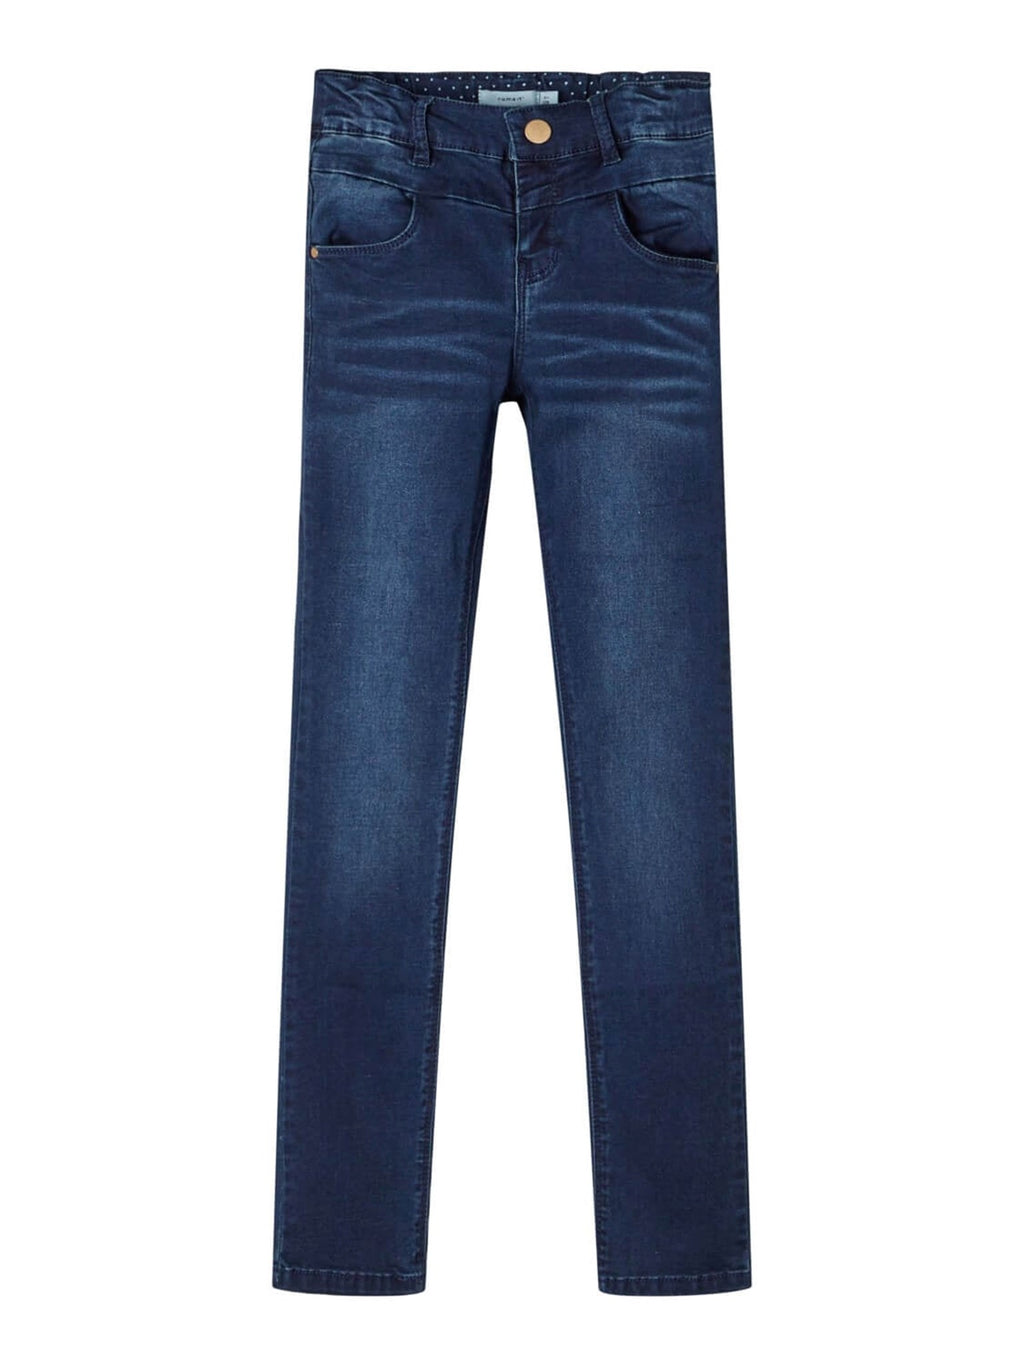 Polly skinny jeans - Mørkeblå denim